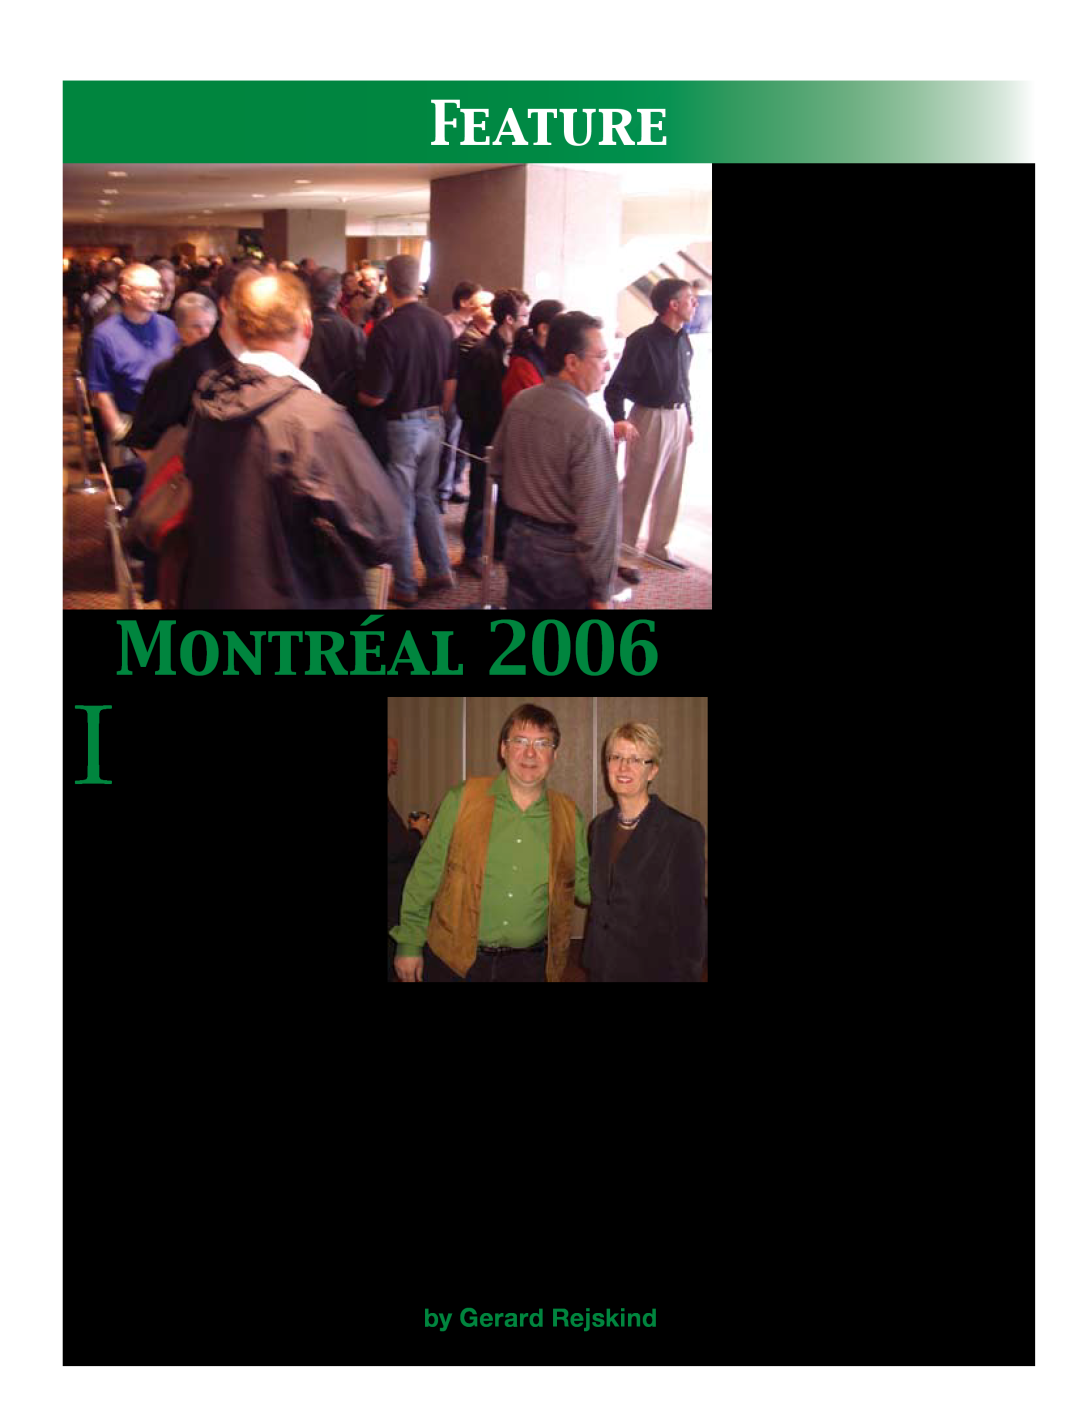 Koss 76 manual Montréal, Feature, by Gerard Rejskind 